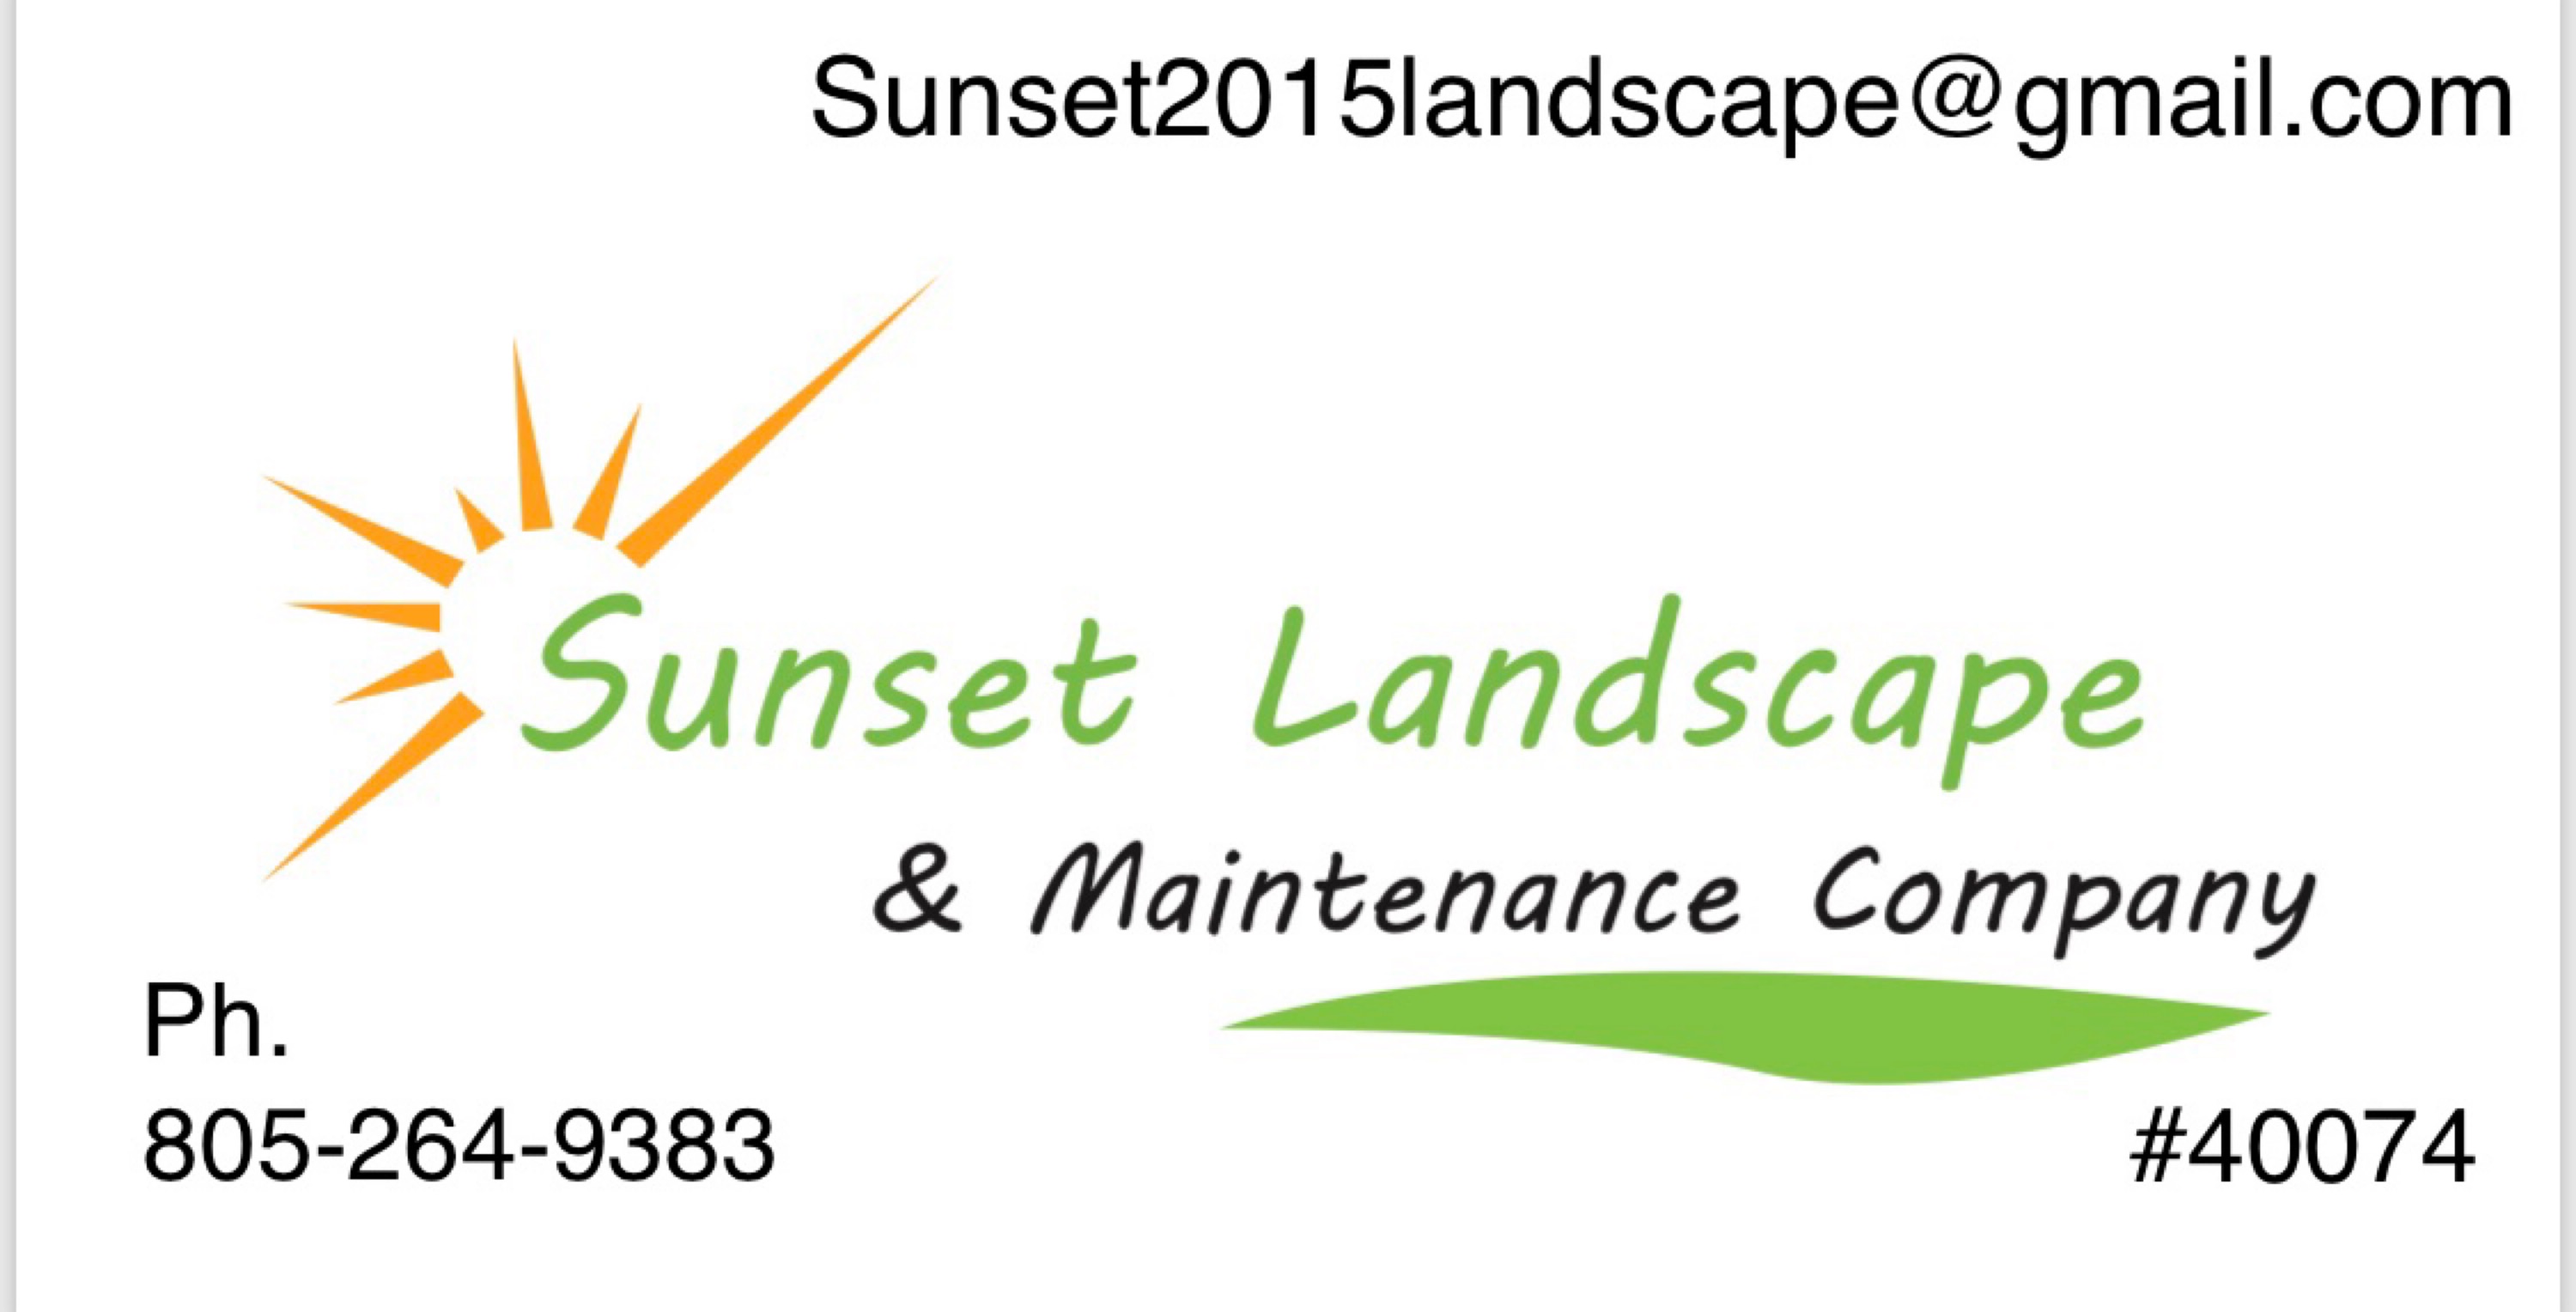 Sunset Landscape and Maintenance Company Logo